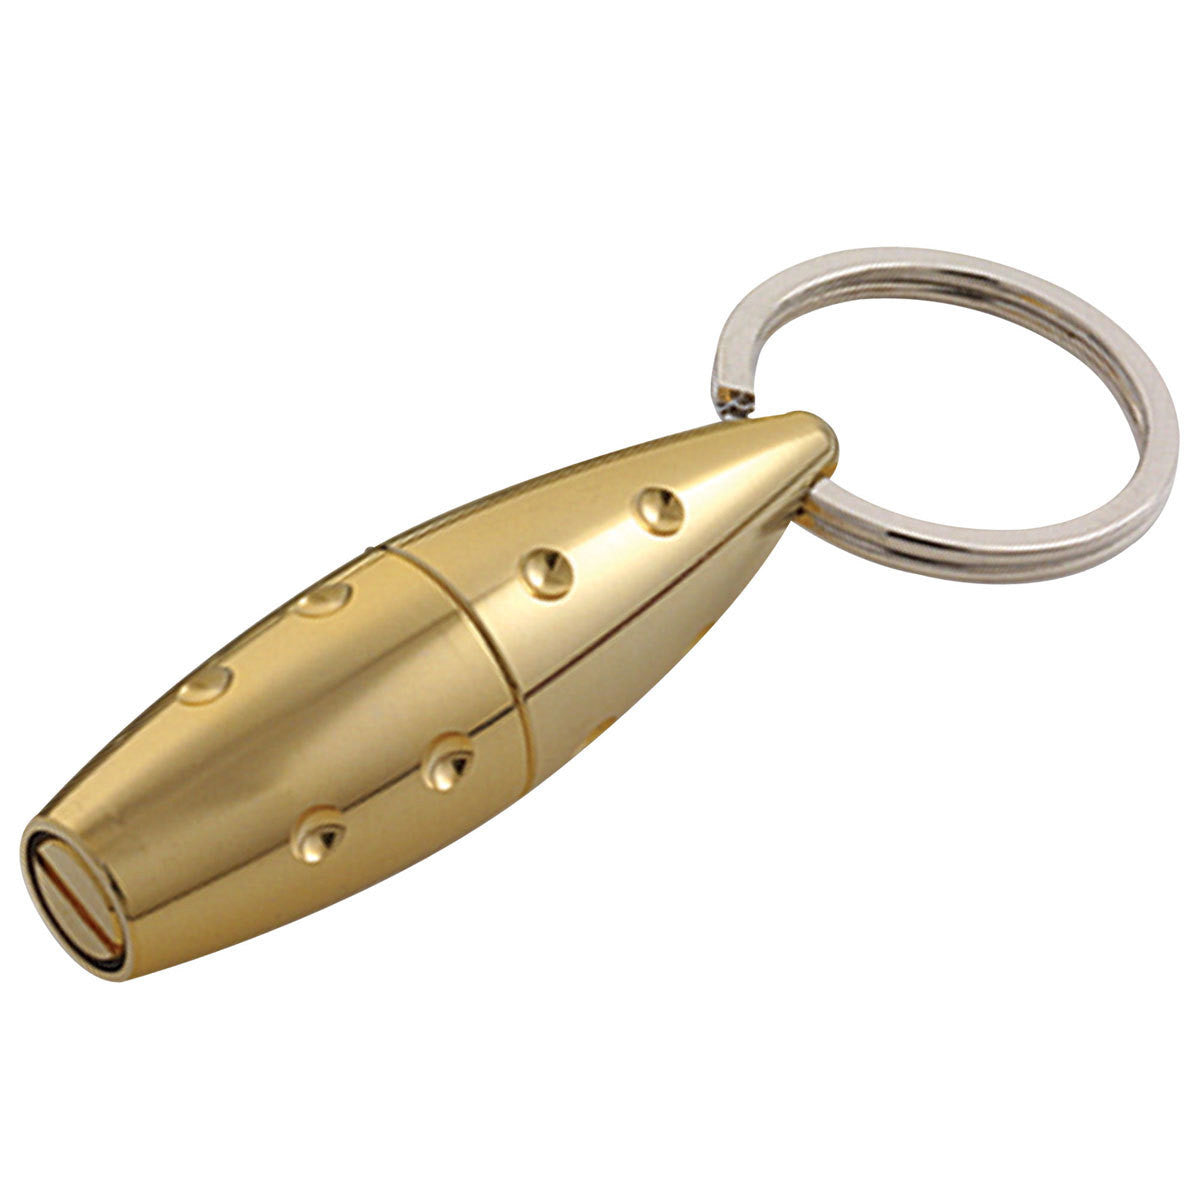 Xikar Cigar Punch bullet 007 Gold - Humidors Wholesaler